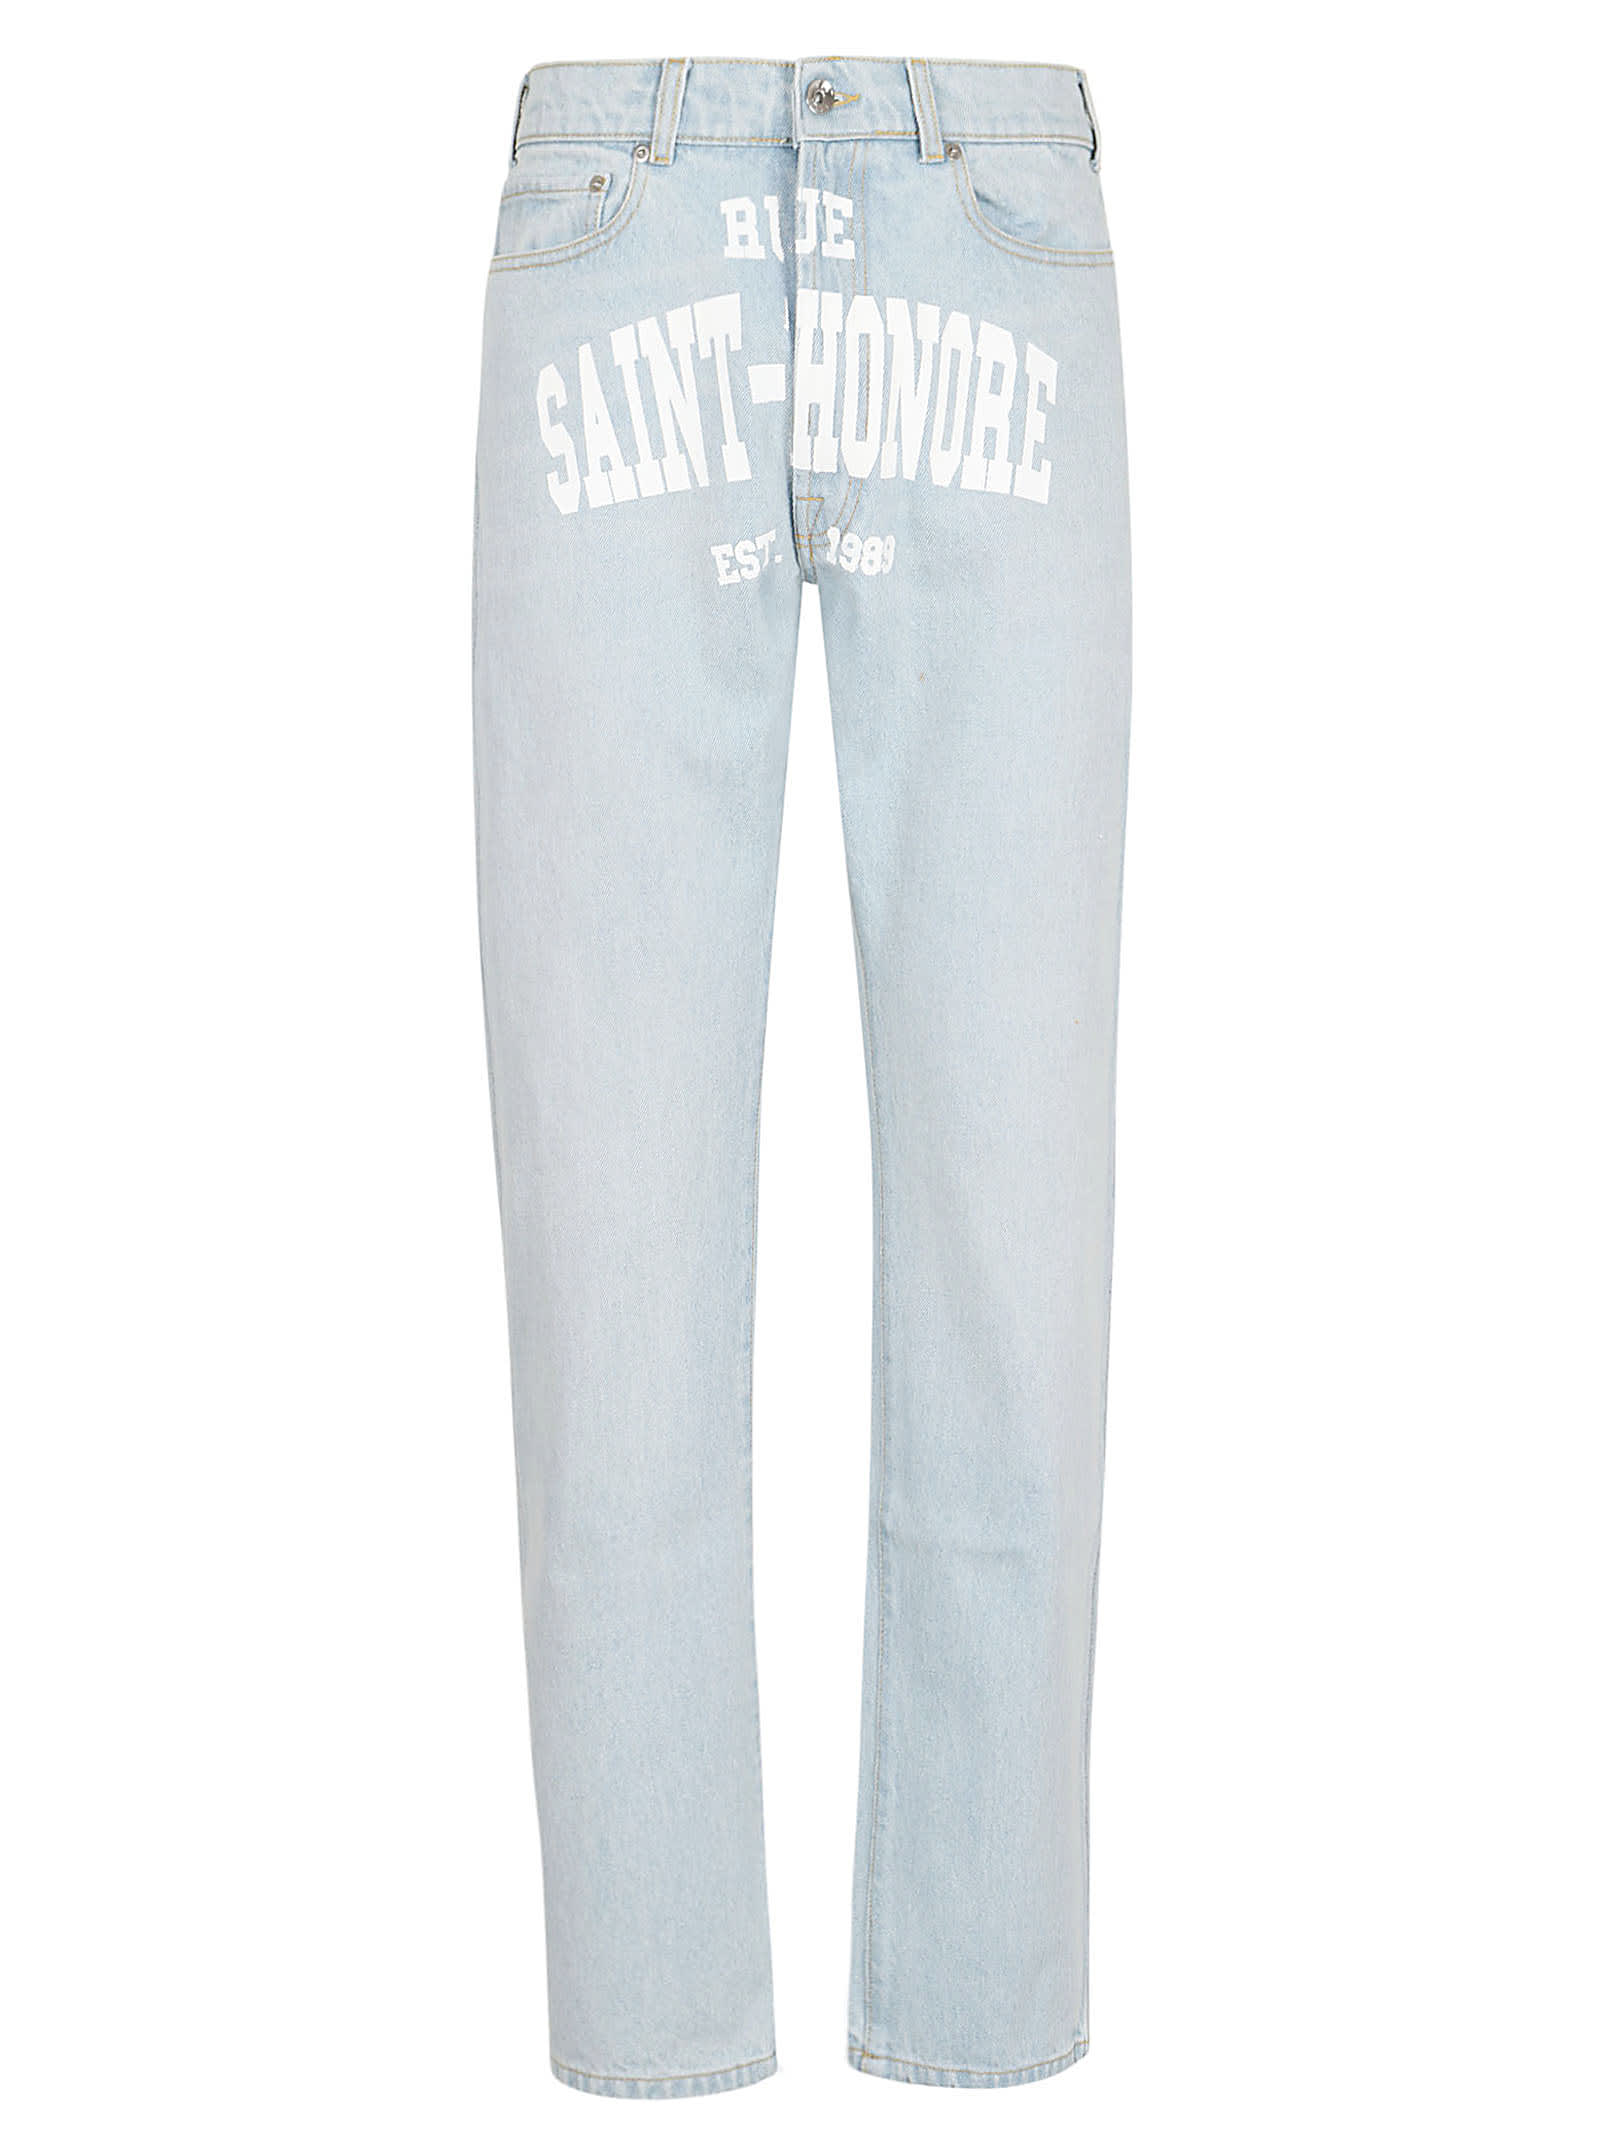 Saint Honore Denim Jeans